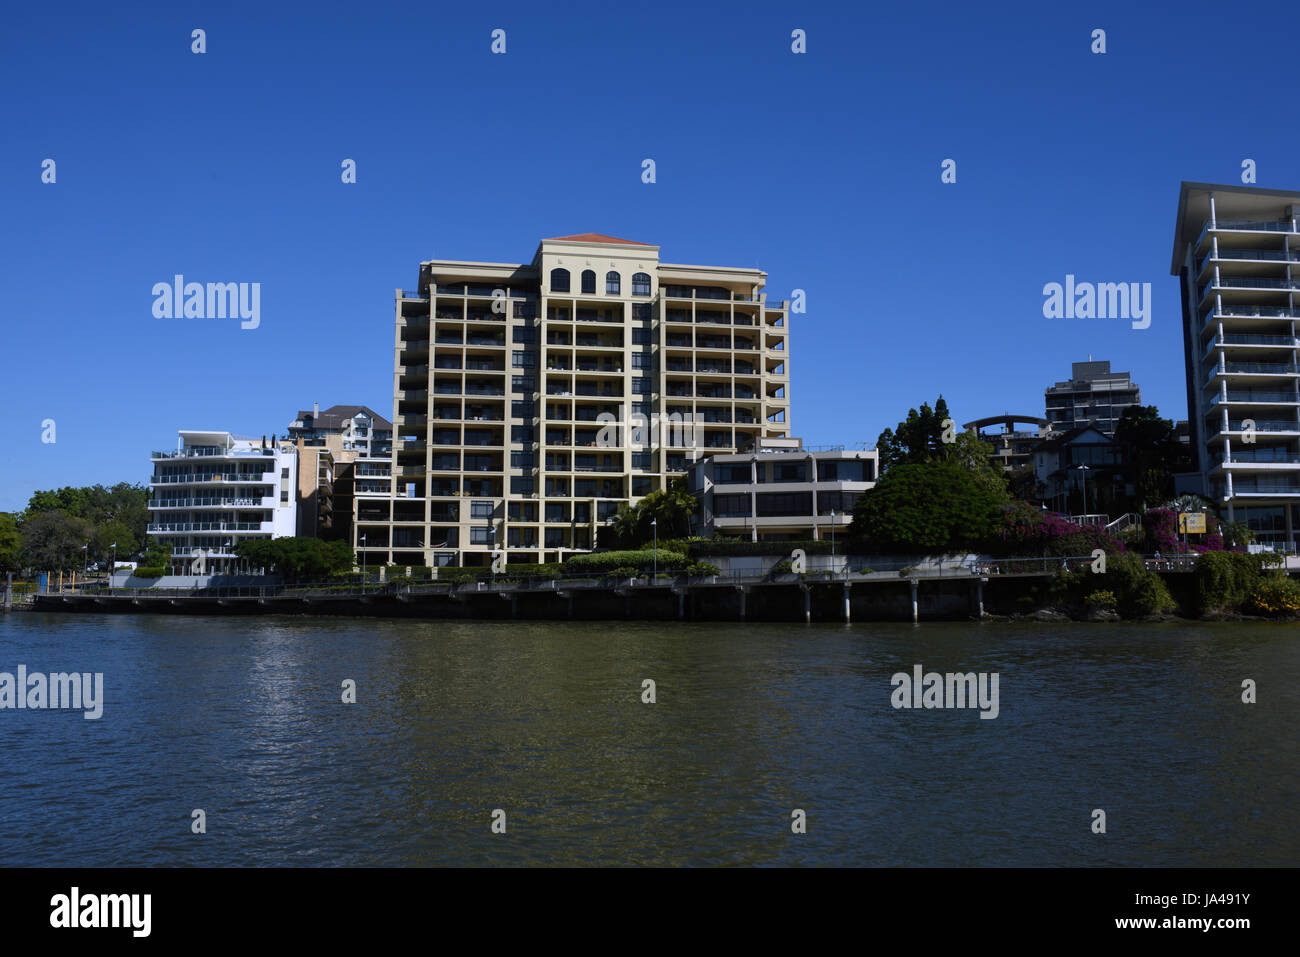 Kangaroo Point, Brisbane, Australia: High-rise apartment buildings lining the Brisbane River Stock Photo